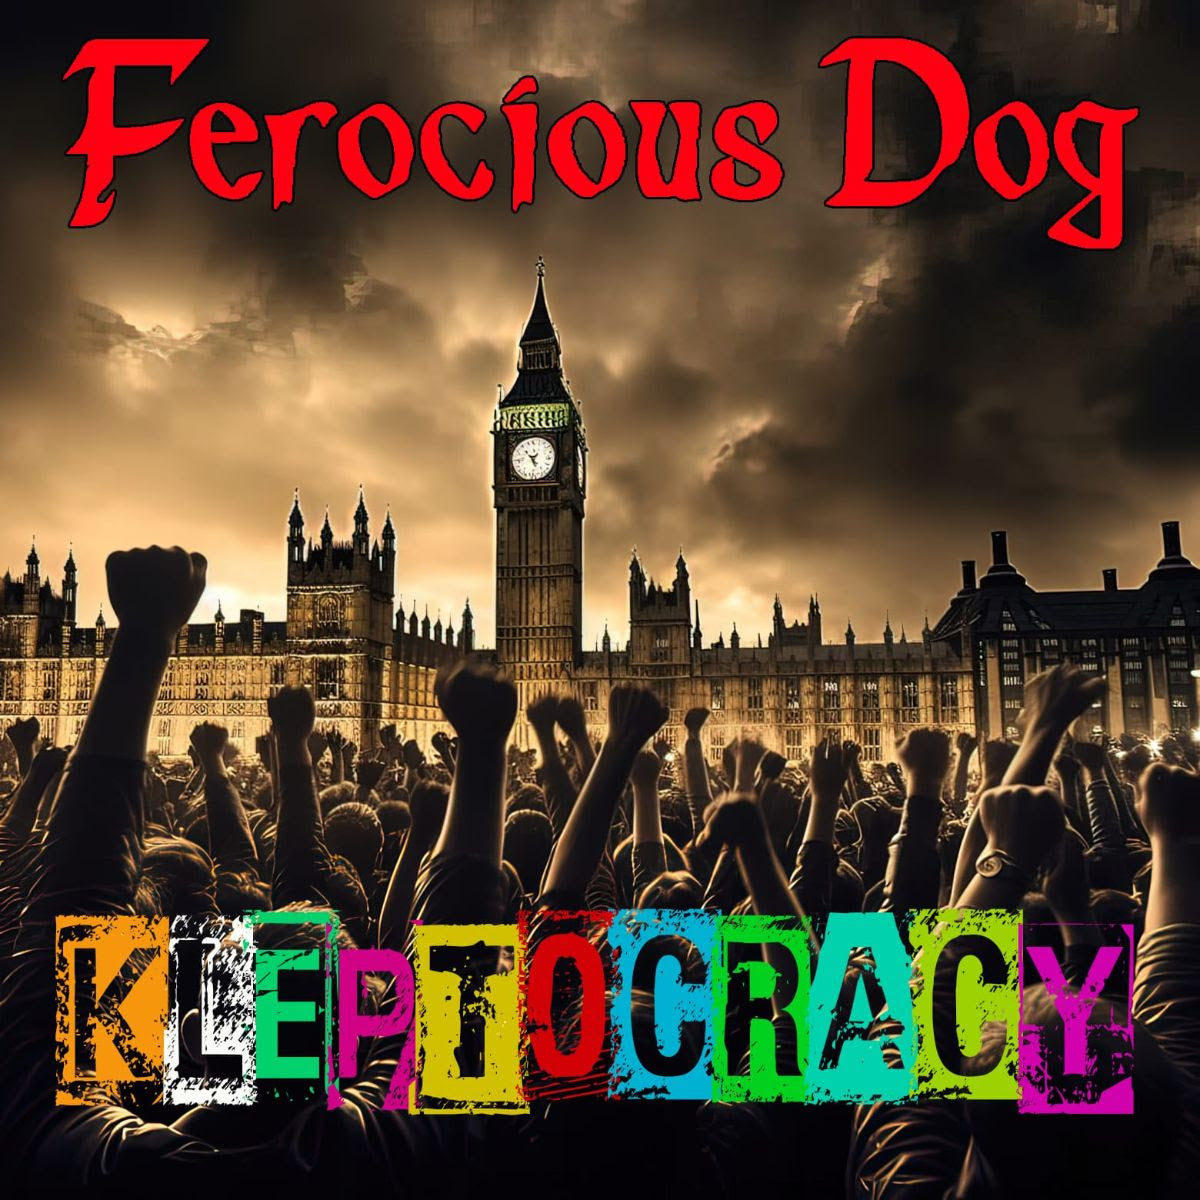 FEROCIOUS DOG - Kleptocracy - CD (w/ Bonus Tracks) [MAY 17]